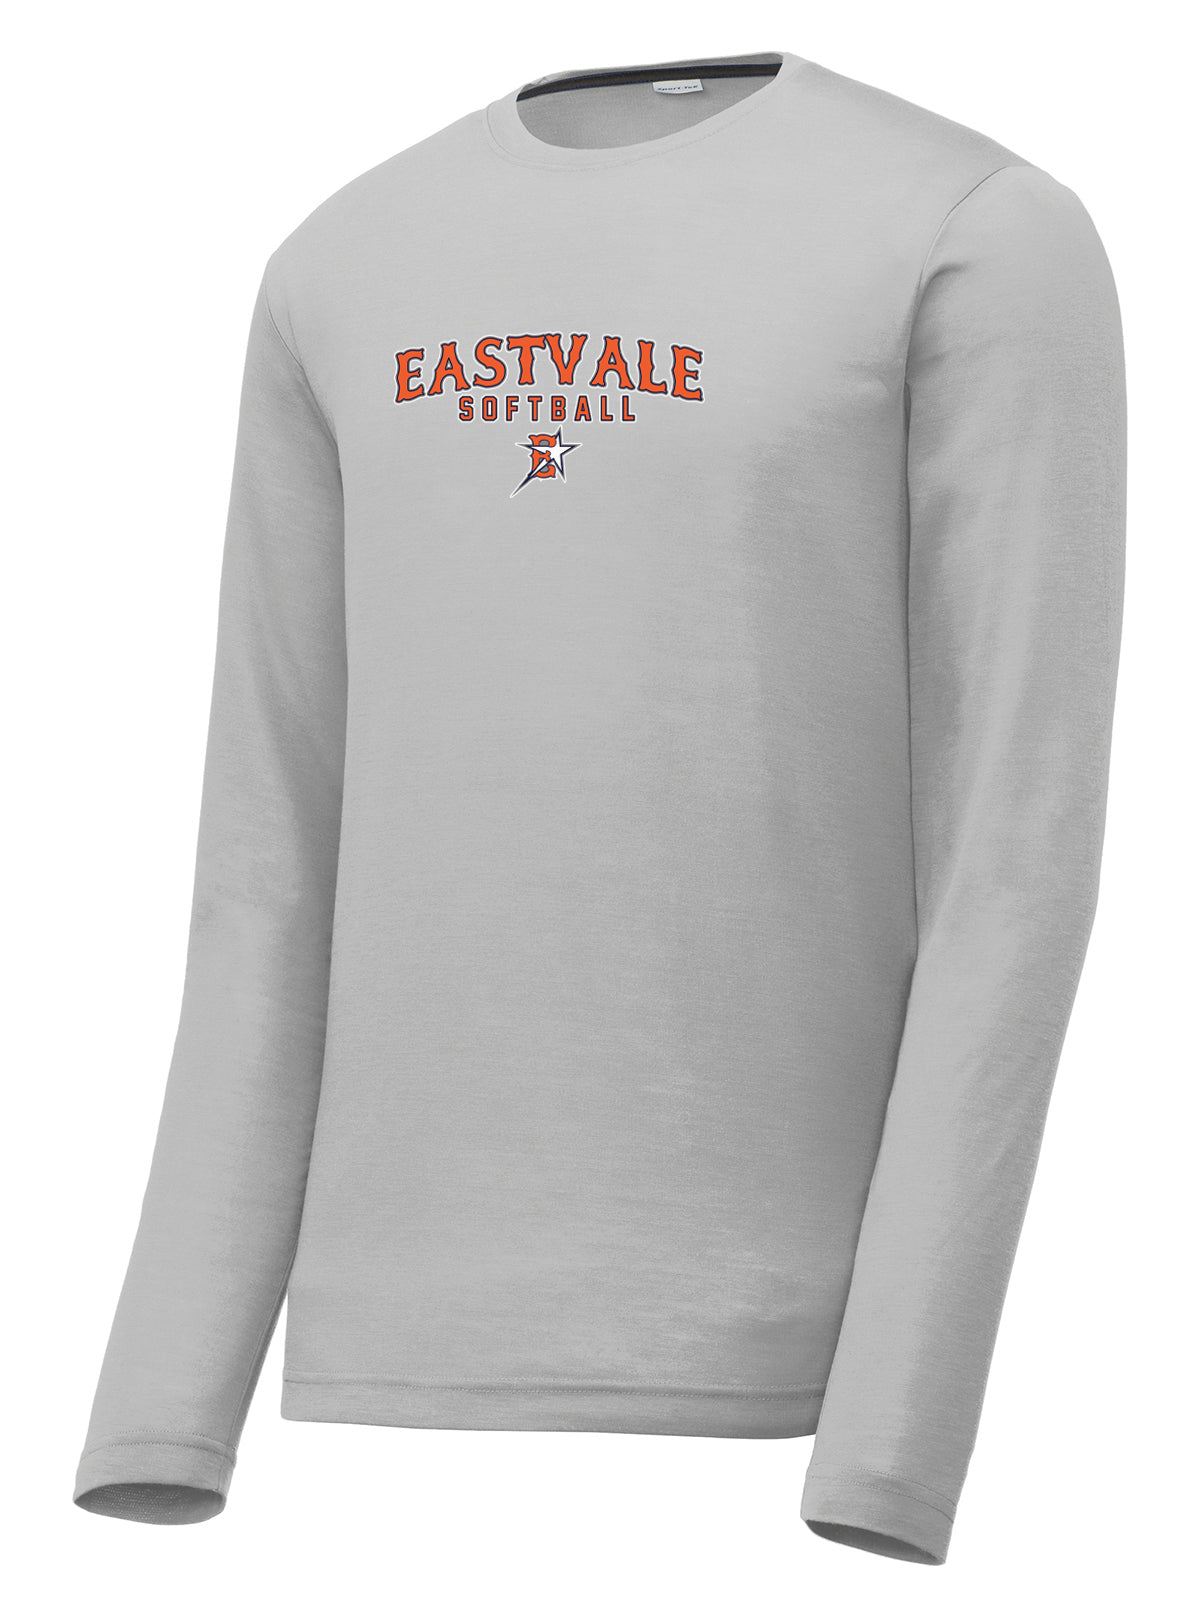 Eastvale Girl's Softball Long Sleeve CottonTouch Performance Shirt